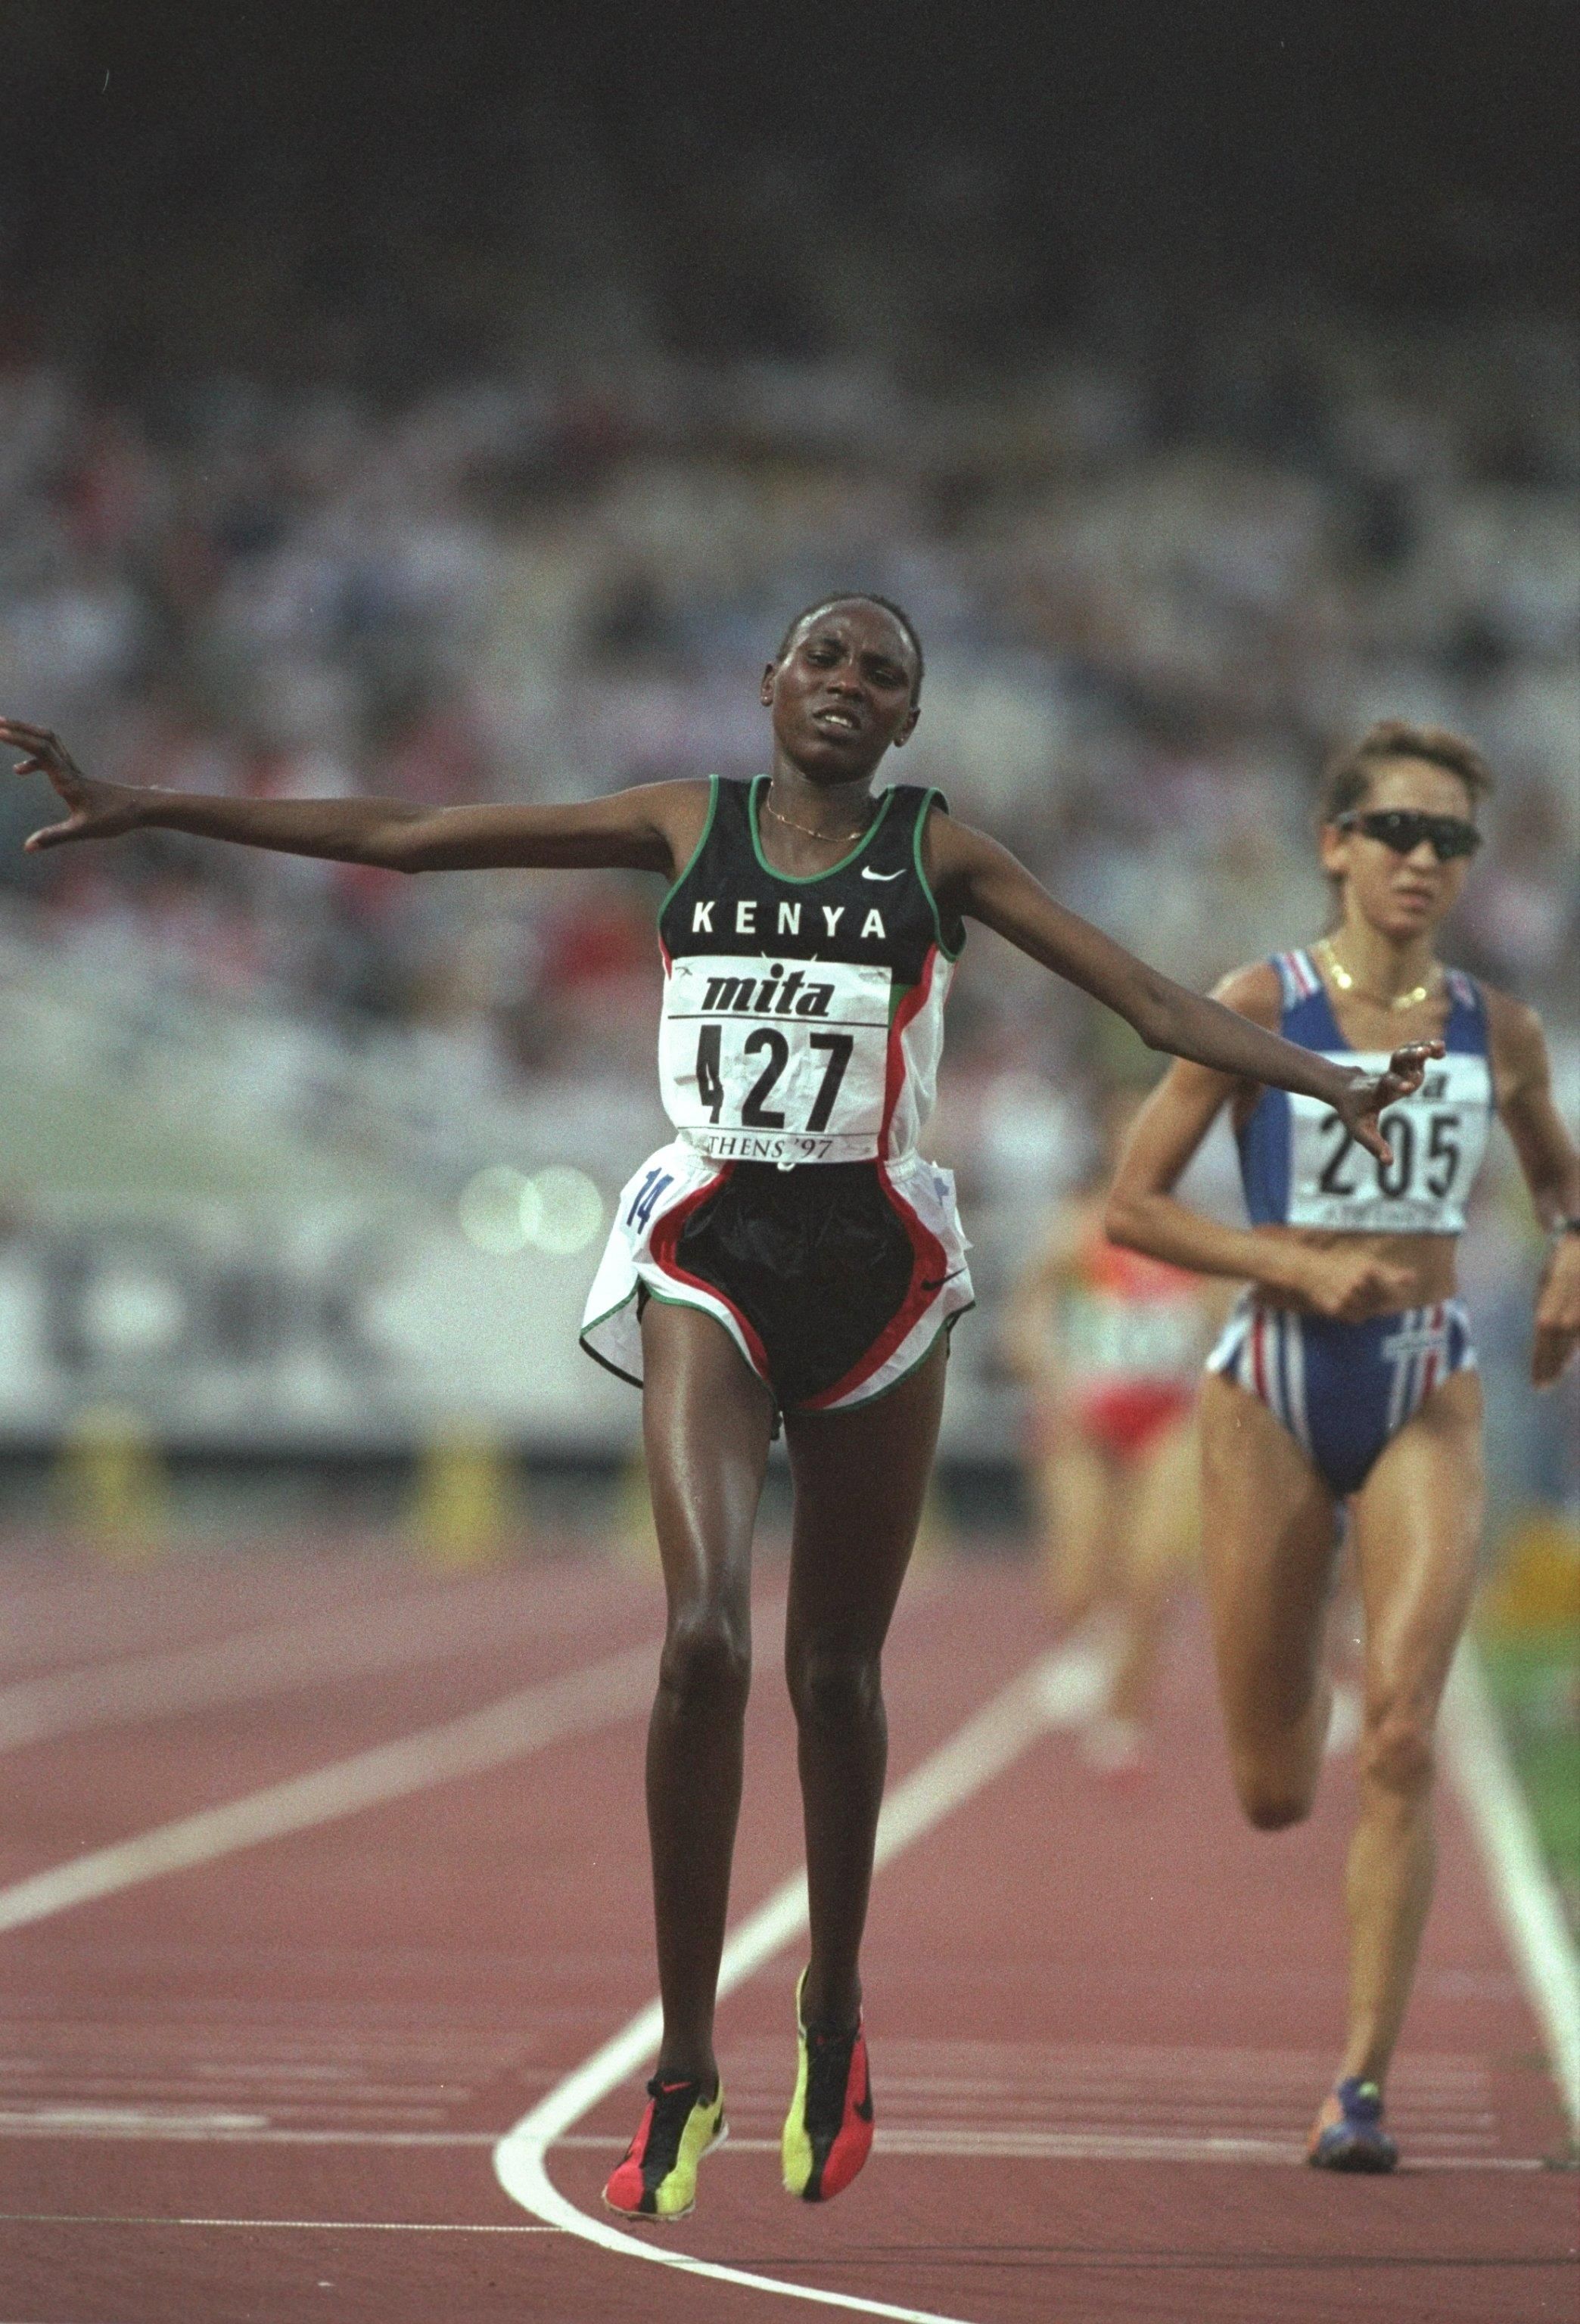 Sally Barsosio winning the 10,000m at the 1997 IAAF World Championships